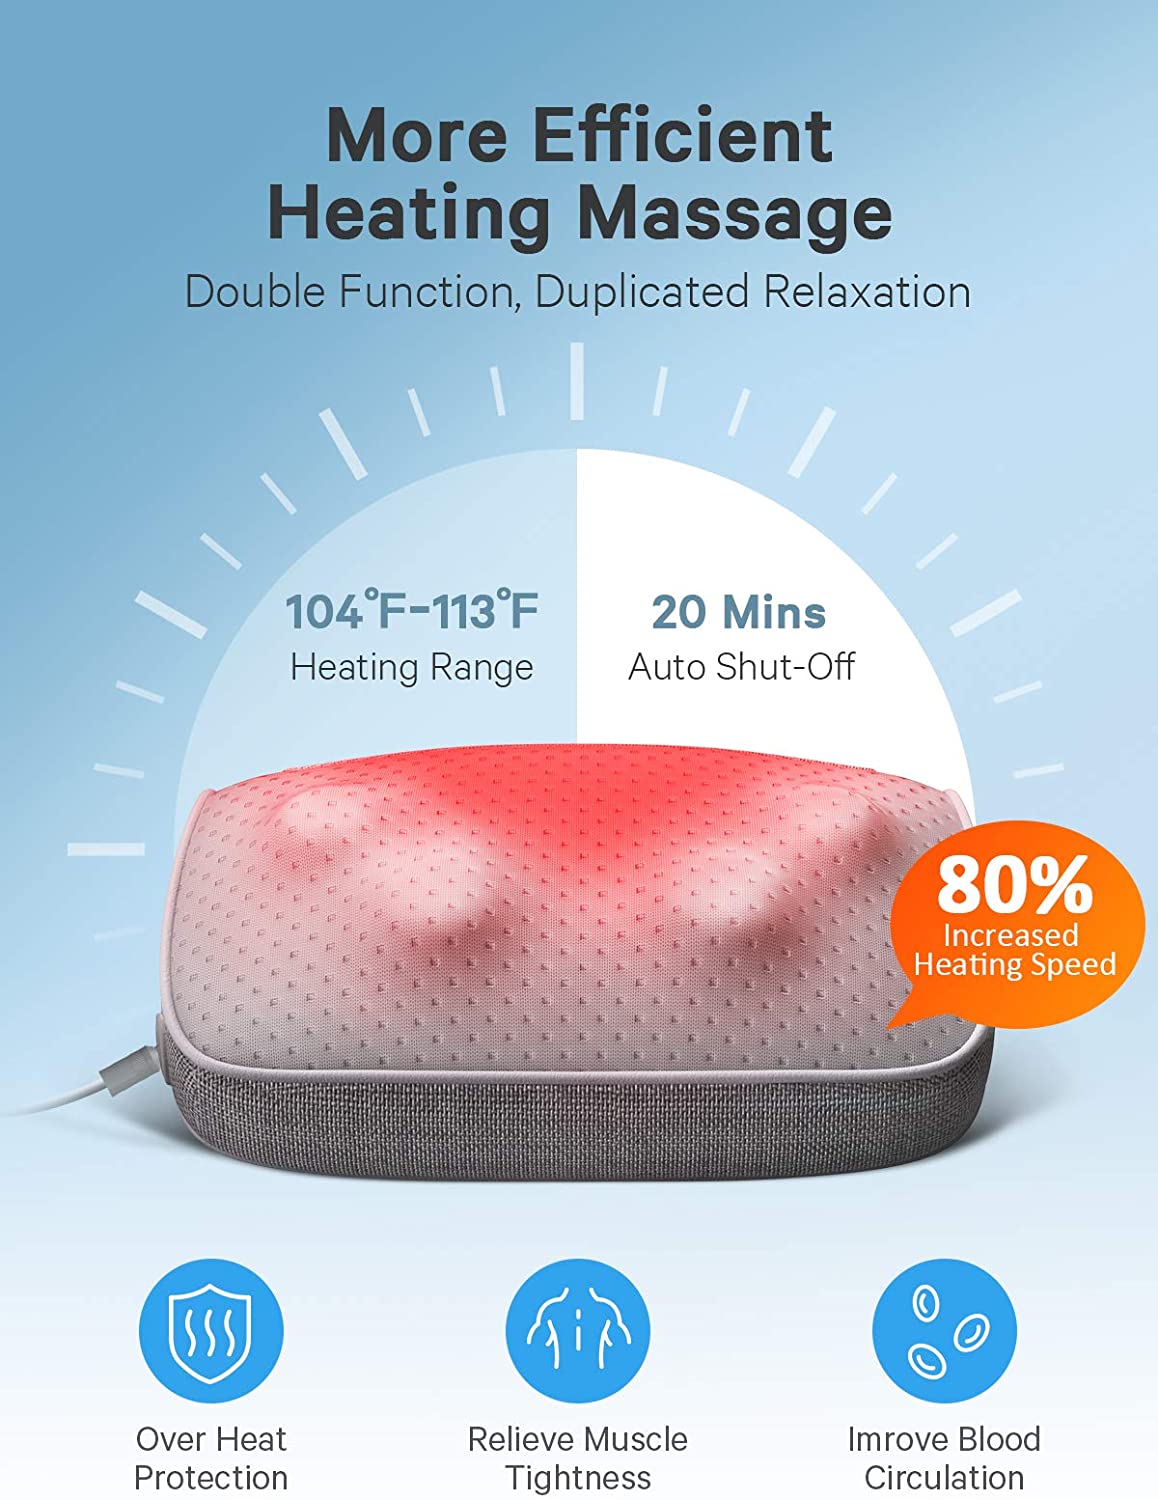 Shiatsu Back and Neck Massager with Heat, 8 Nodes Deep Kneading Massag –  MARNUR